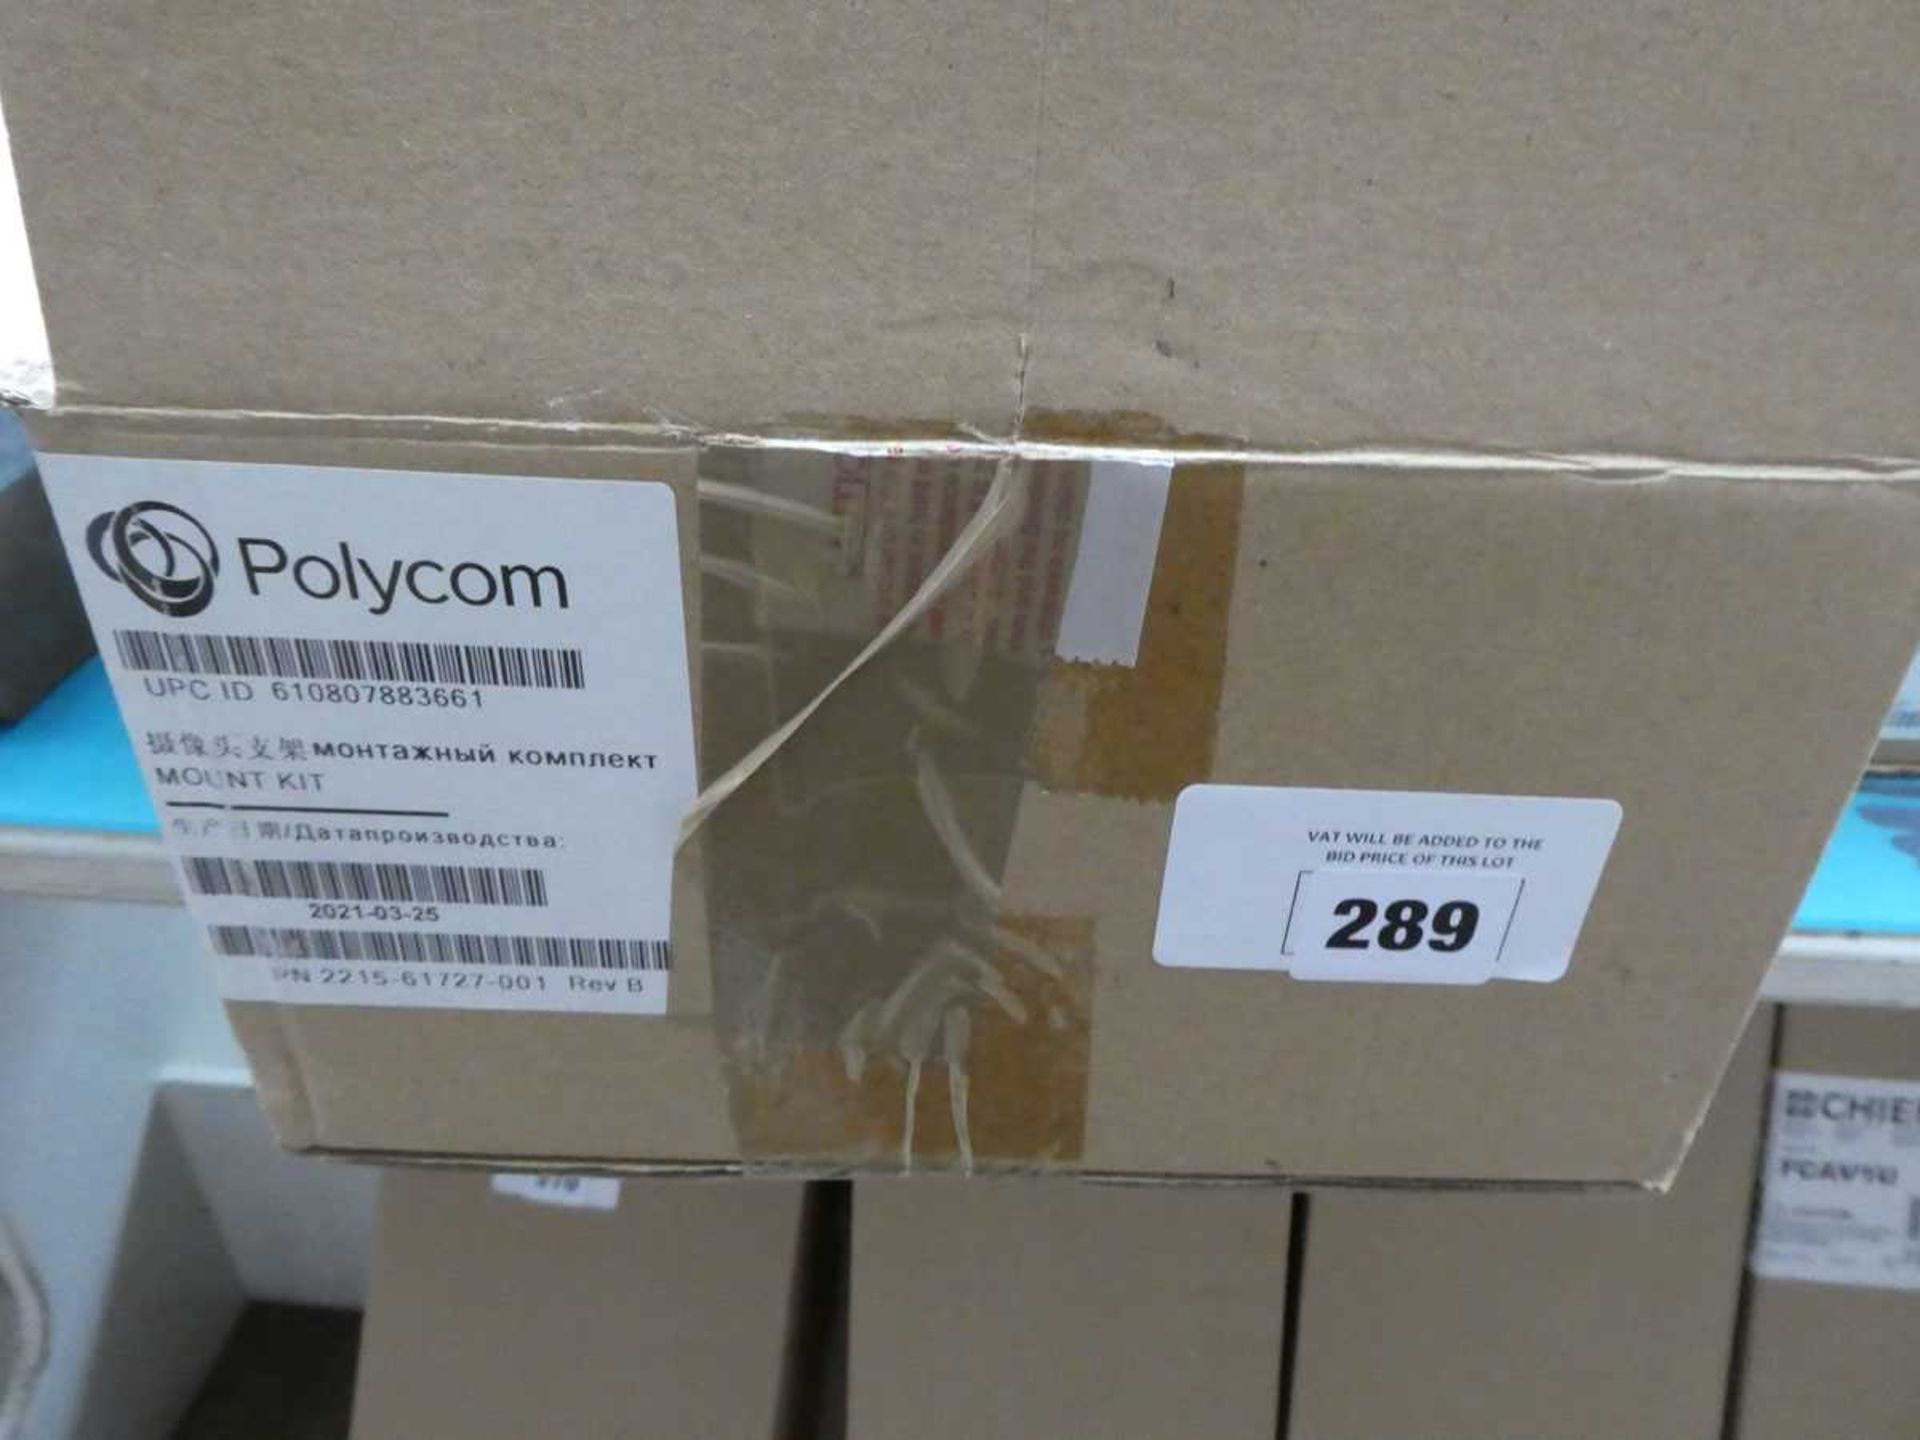 +VAT Polycom Eagle Eye 1v Mk4 USB camera mounting bracket in box - Image 2 of 2